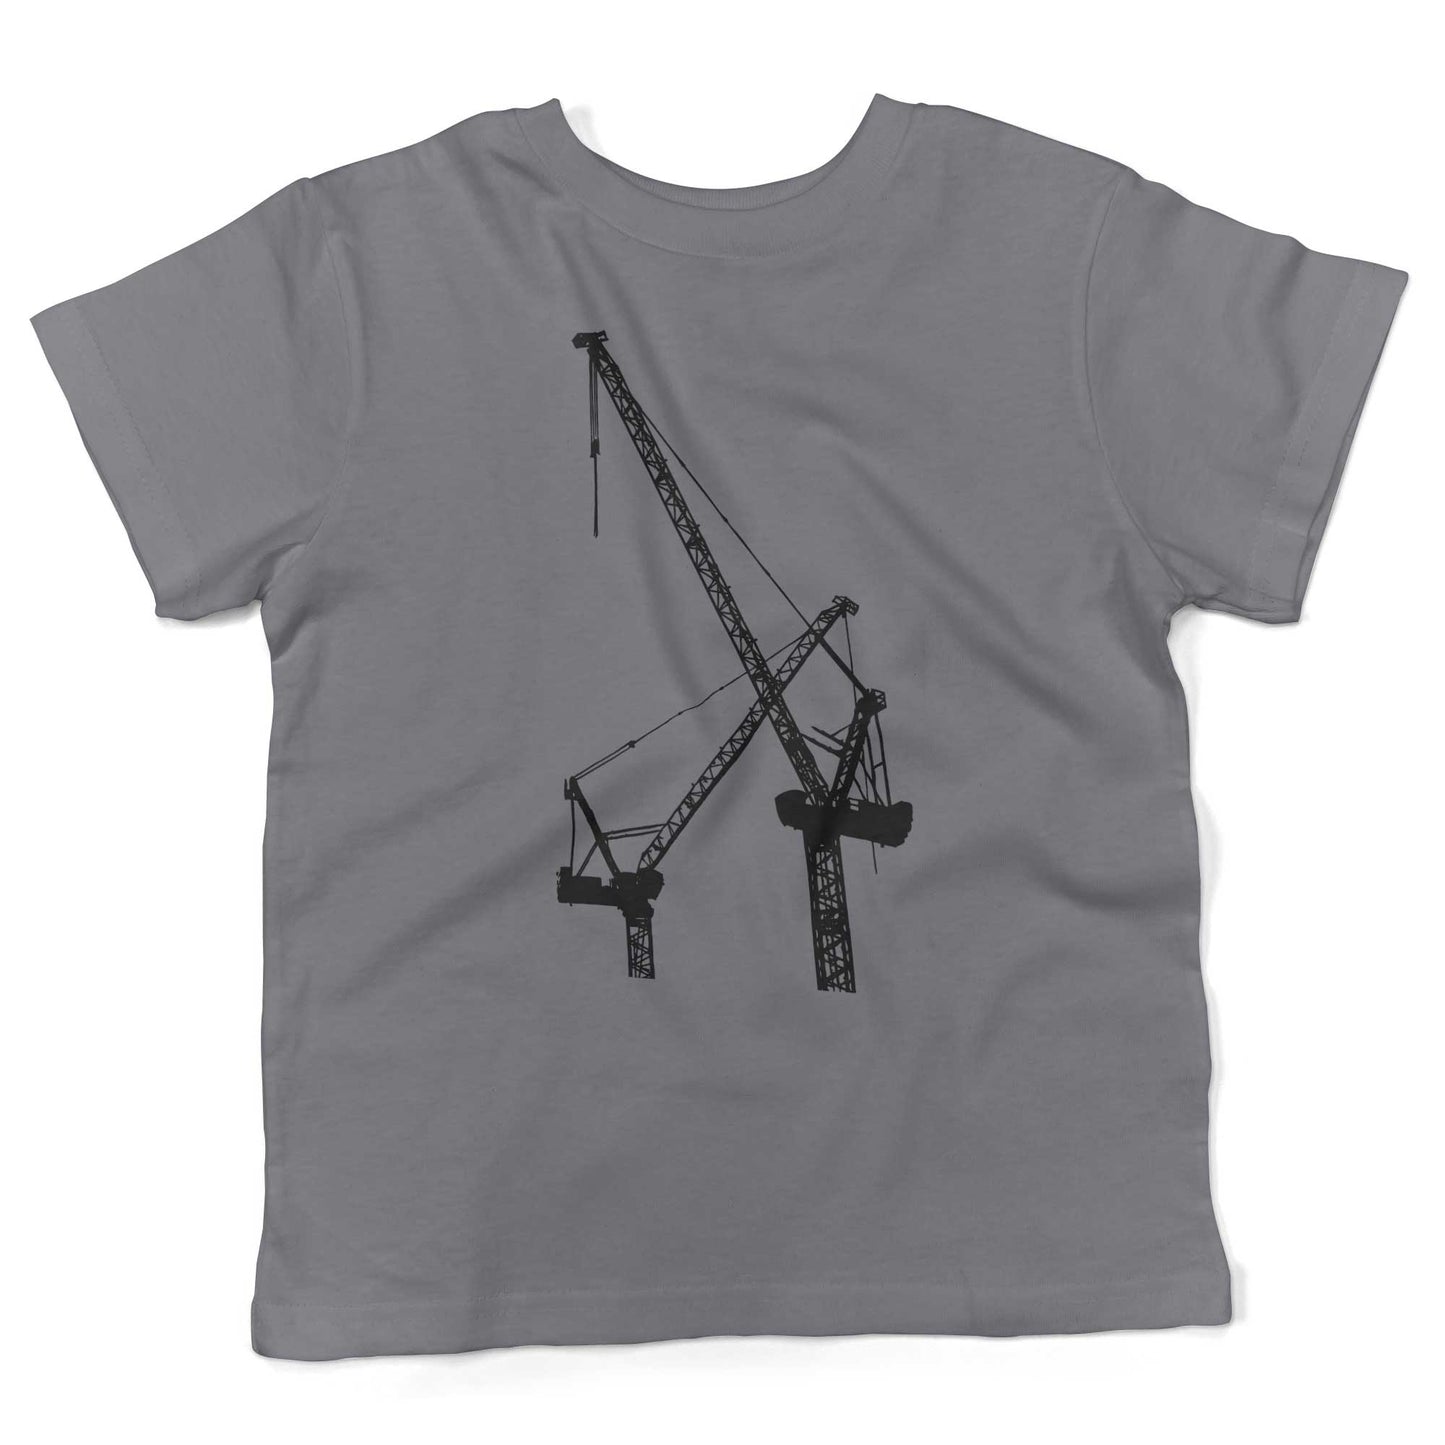 Construction Cranes Toddler Shirt-Slate-2T